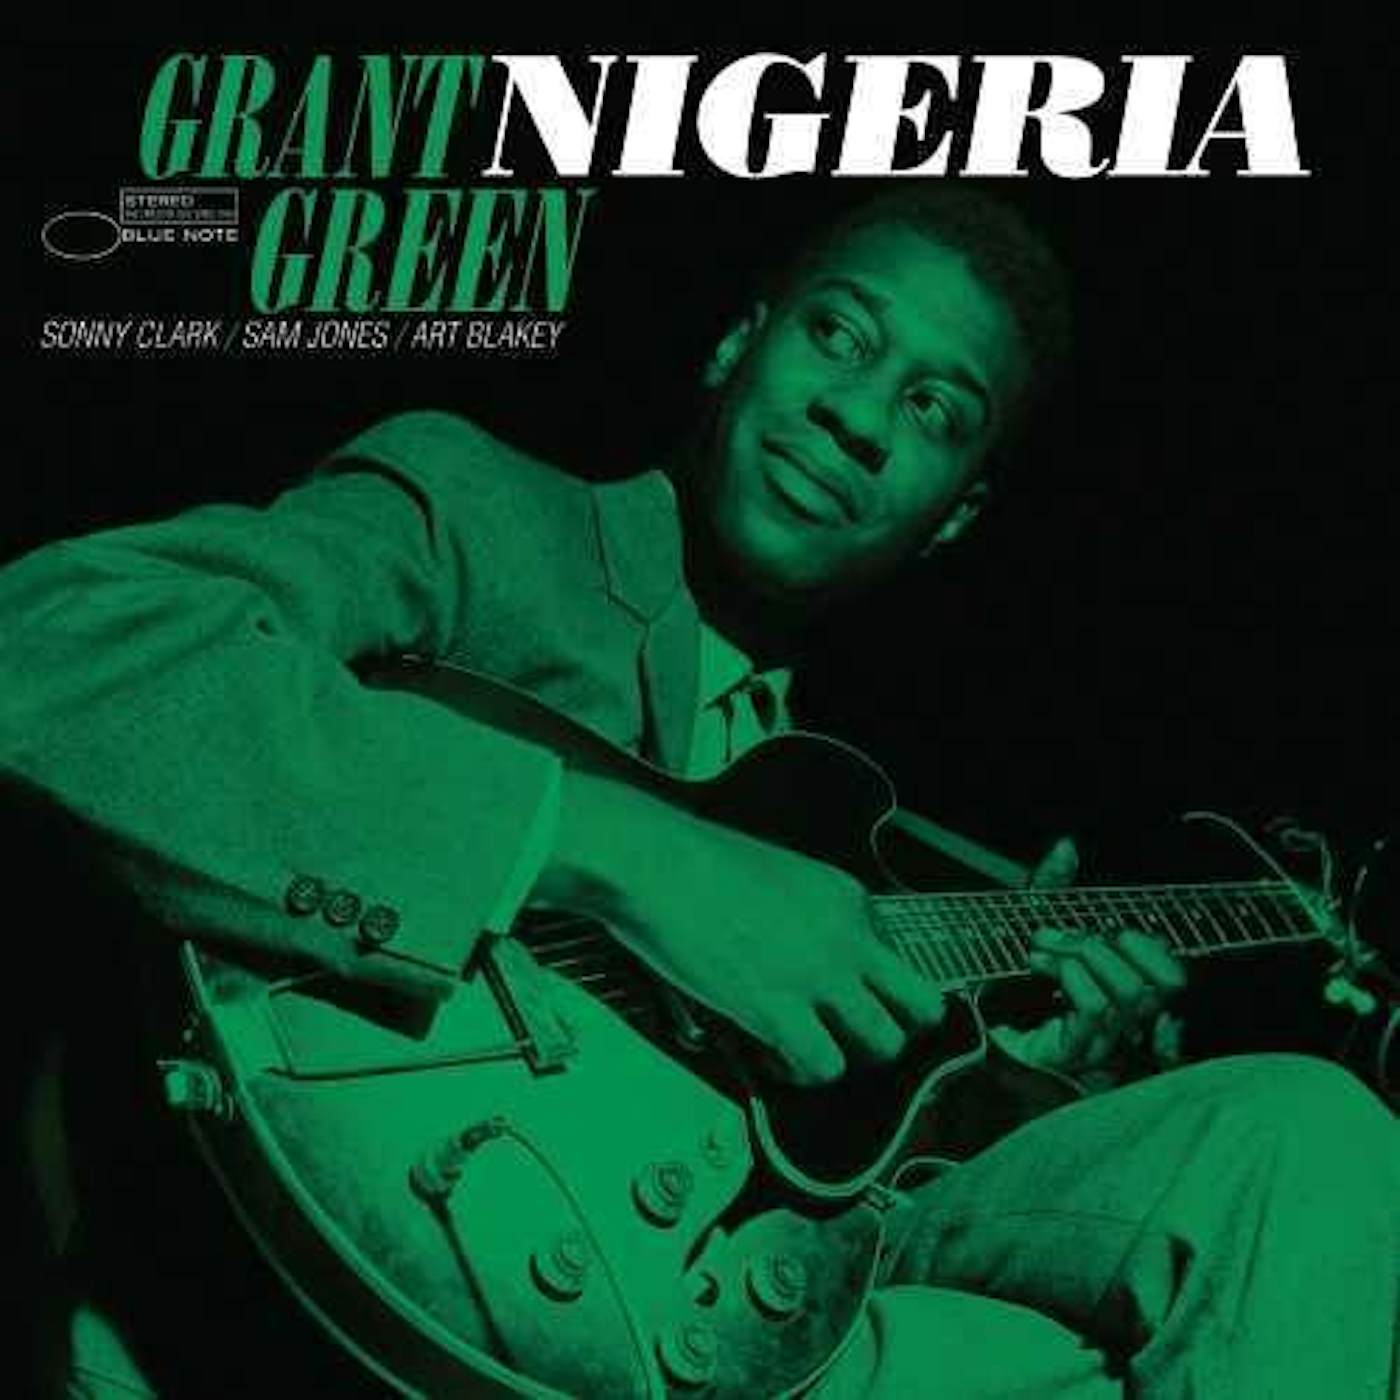 Grant Green Nigeria Vinyl Record